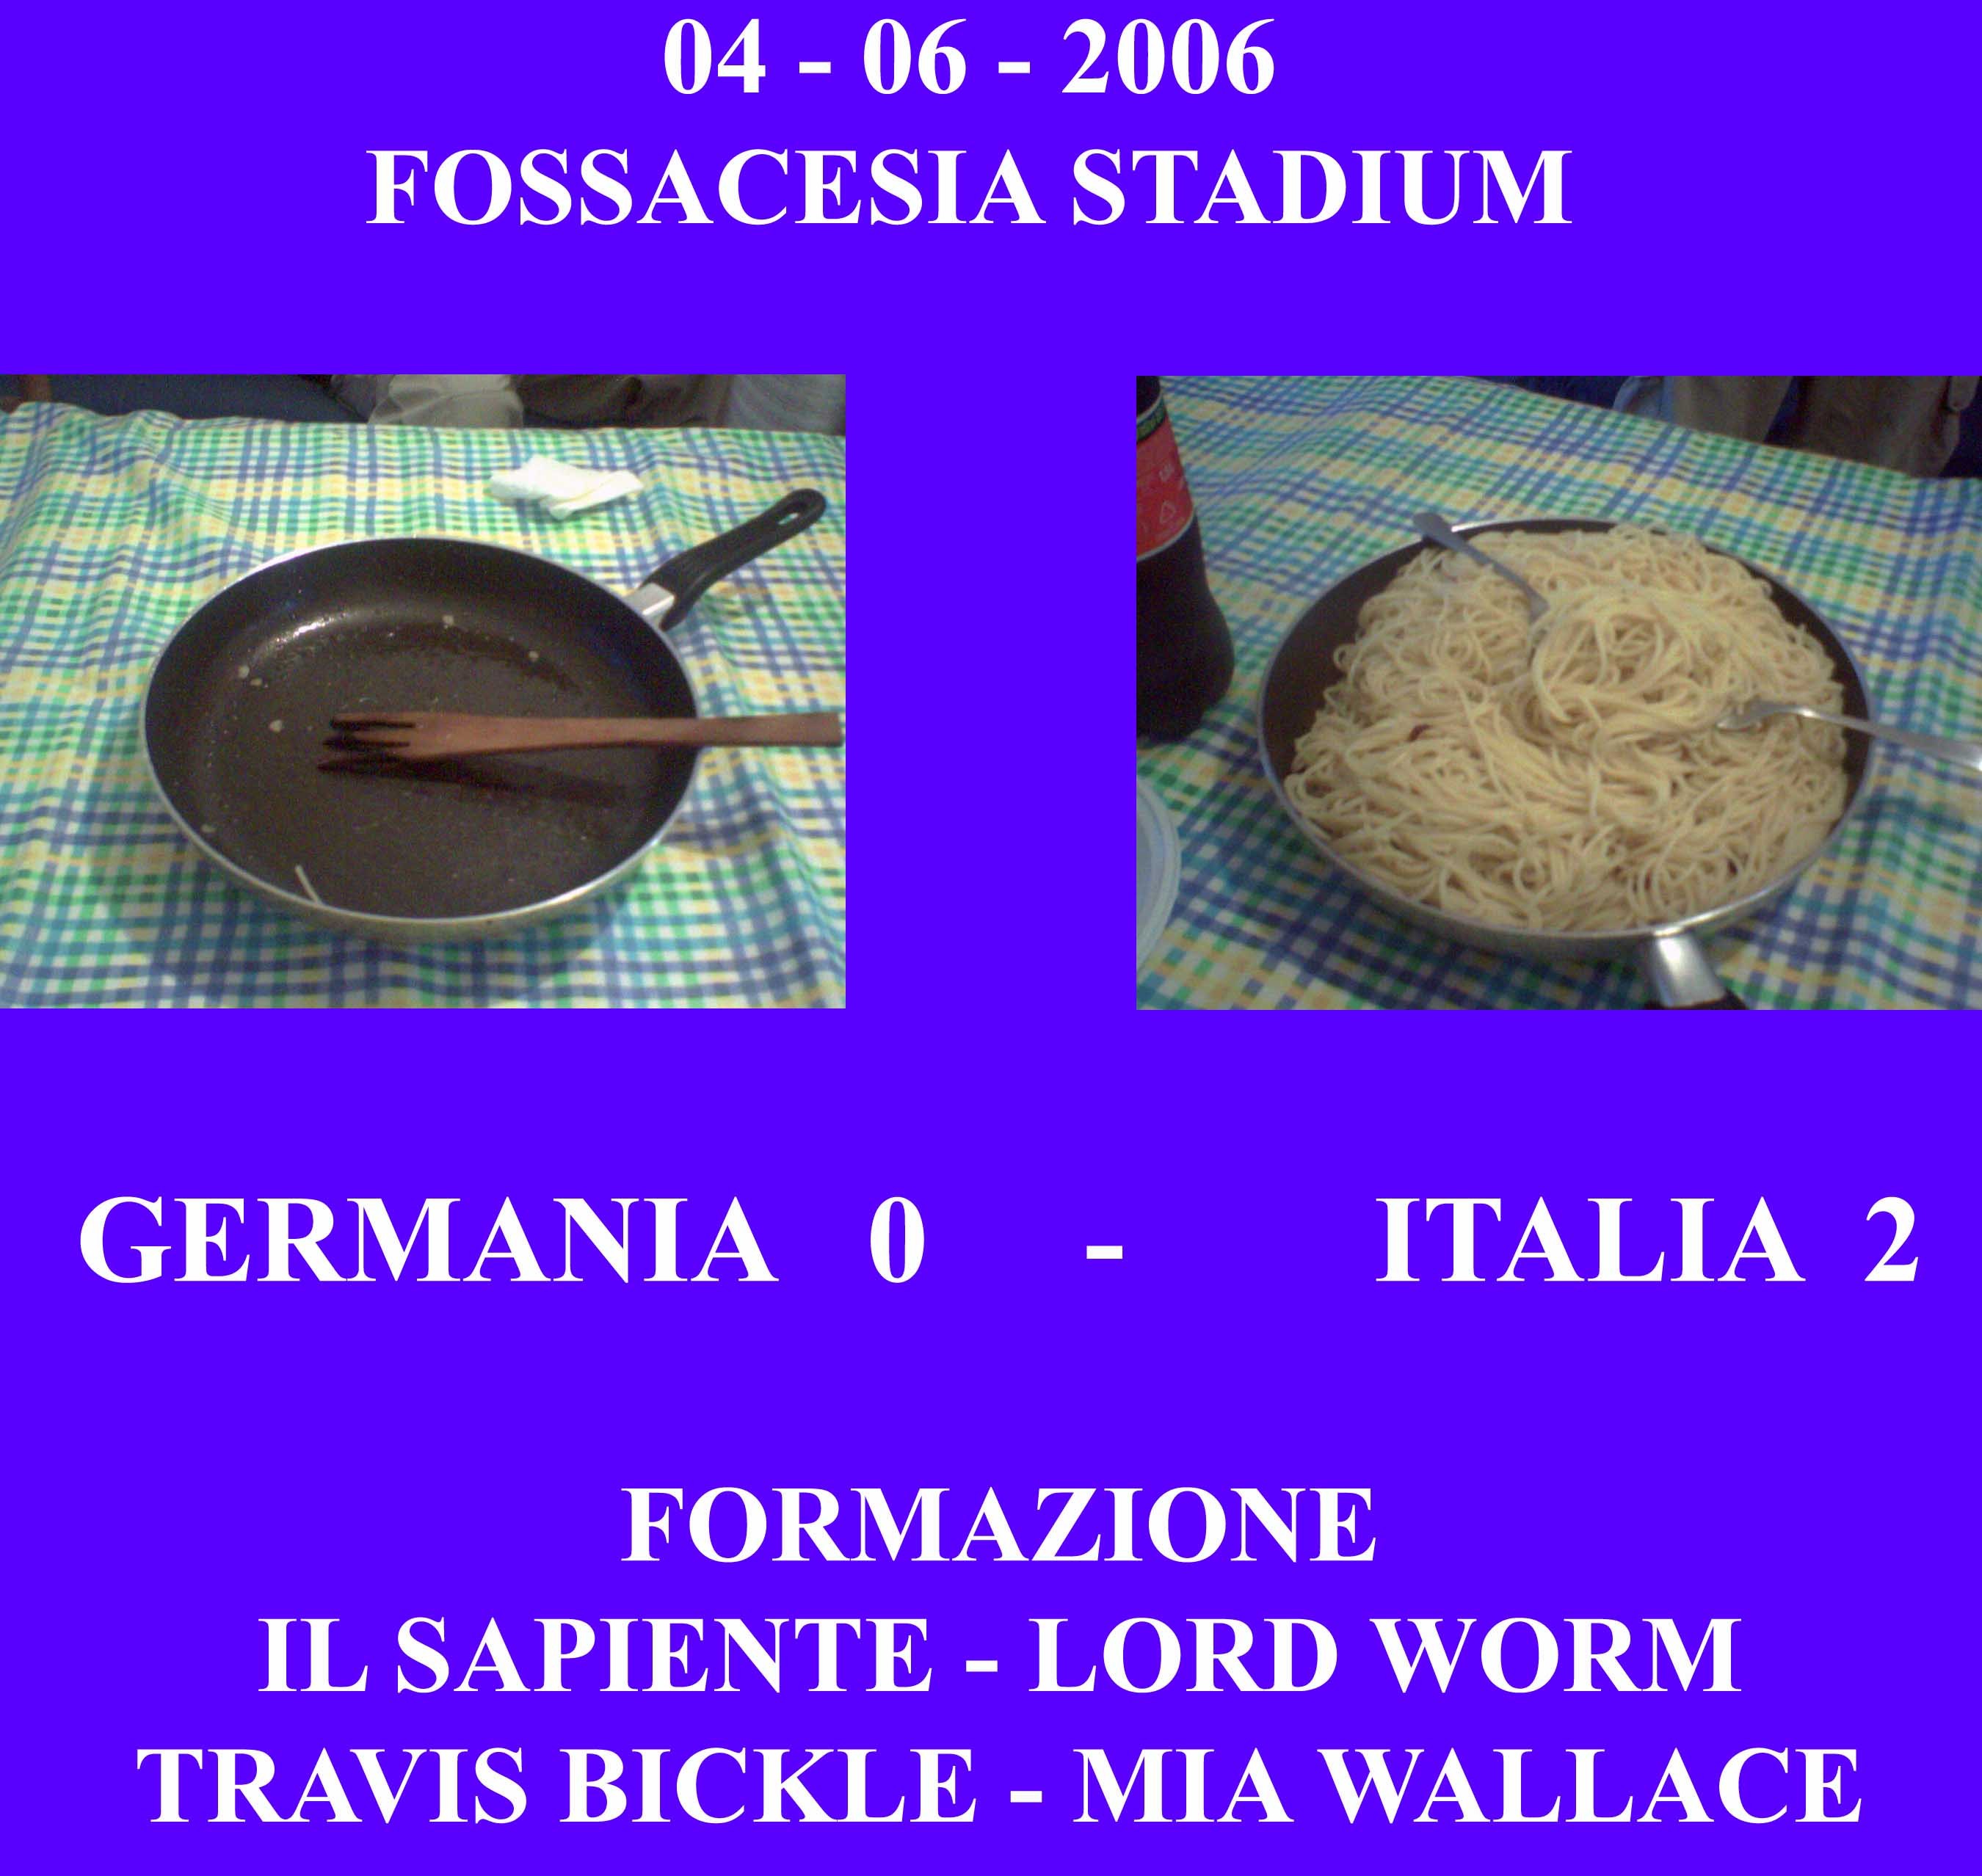 GERMANIA - ITALIA 0 - 2